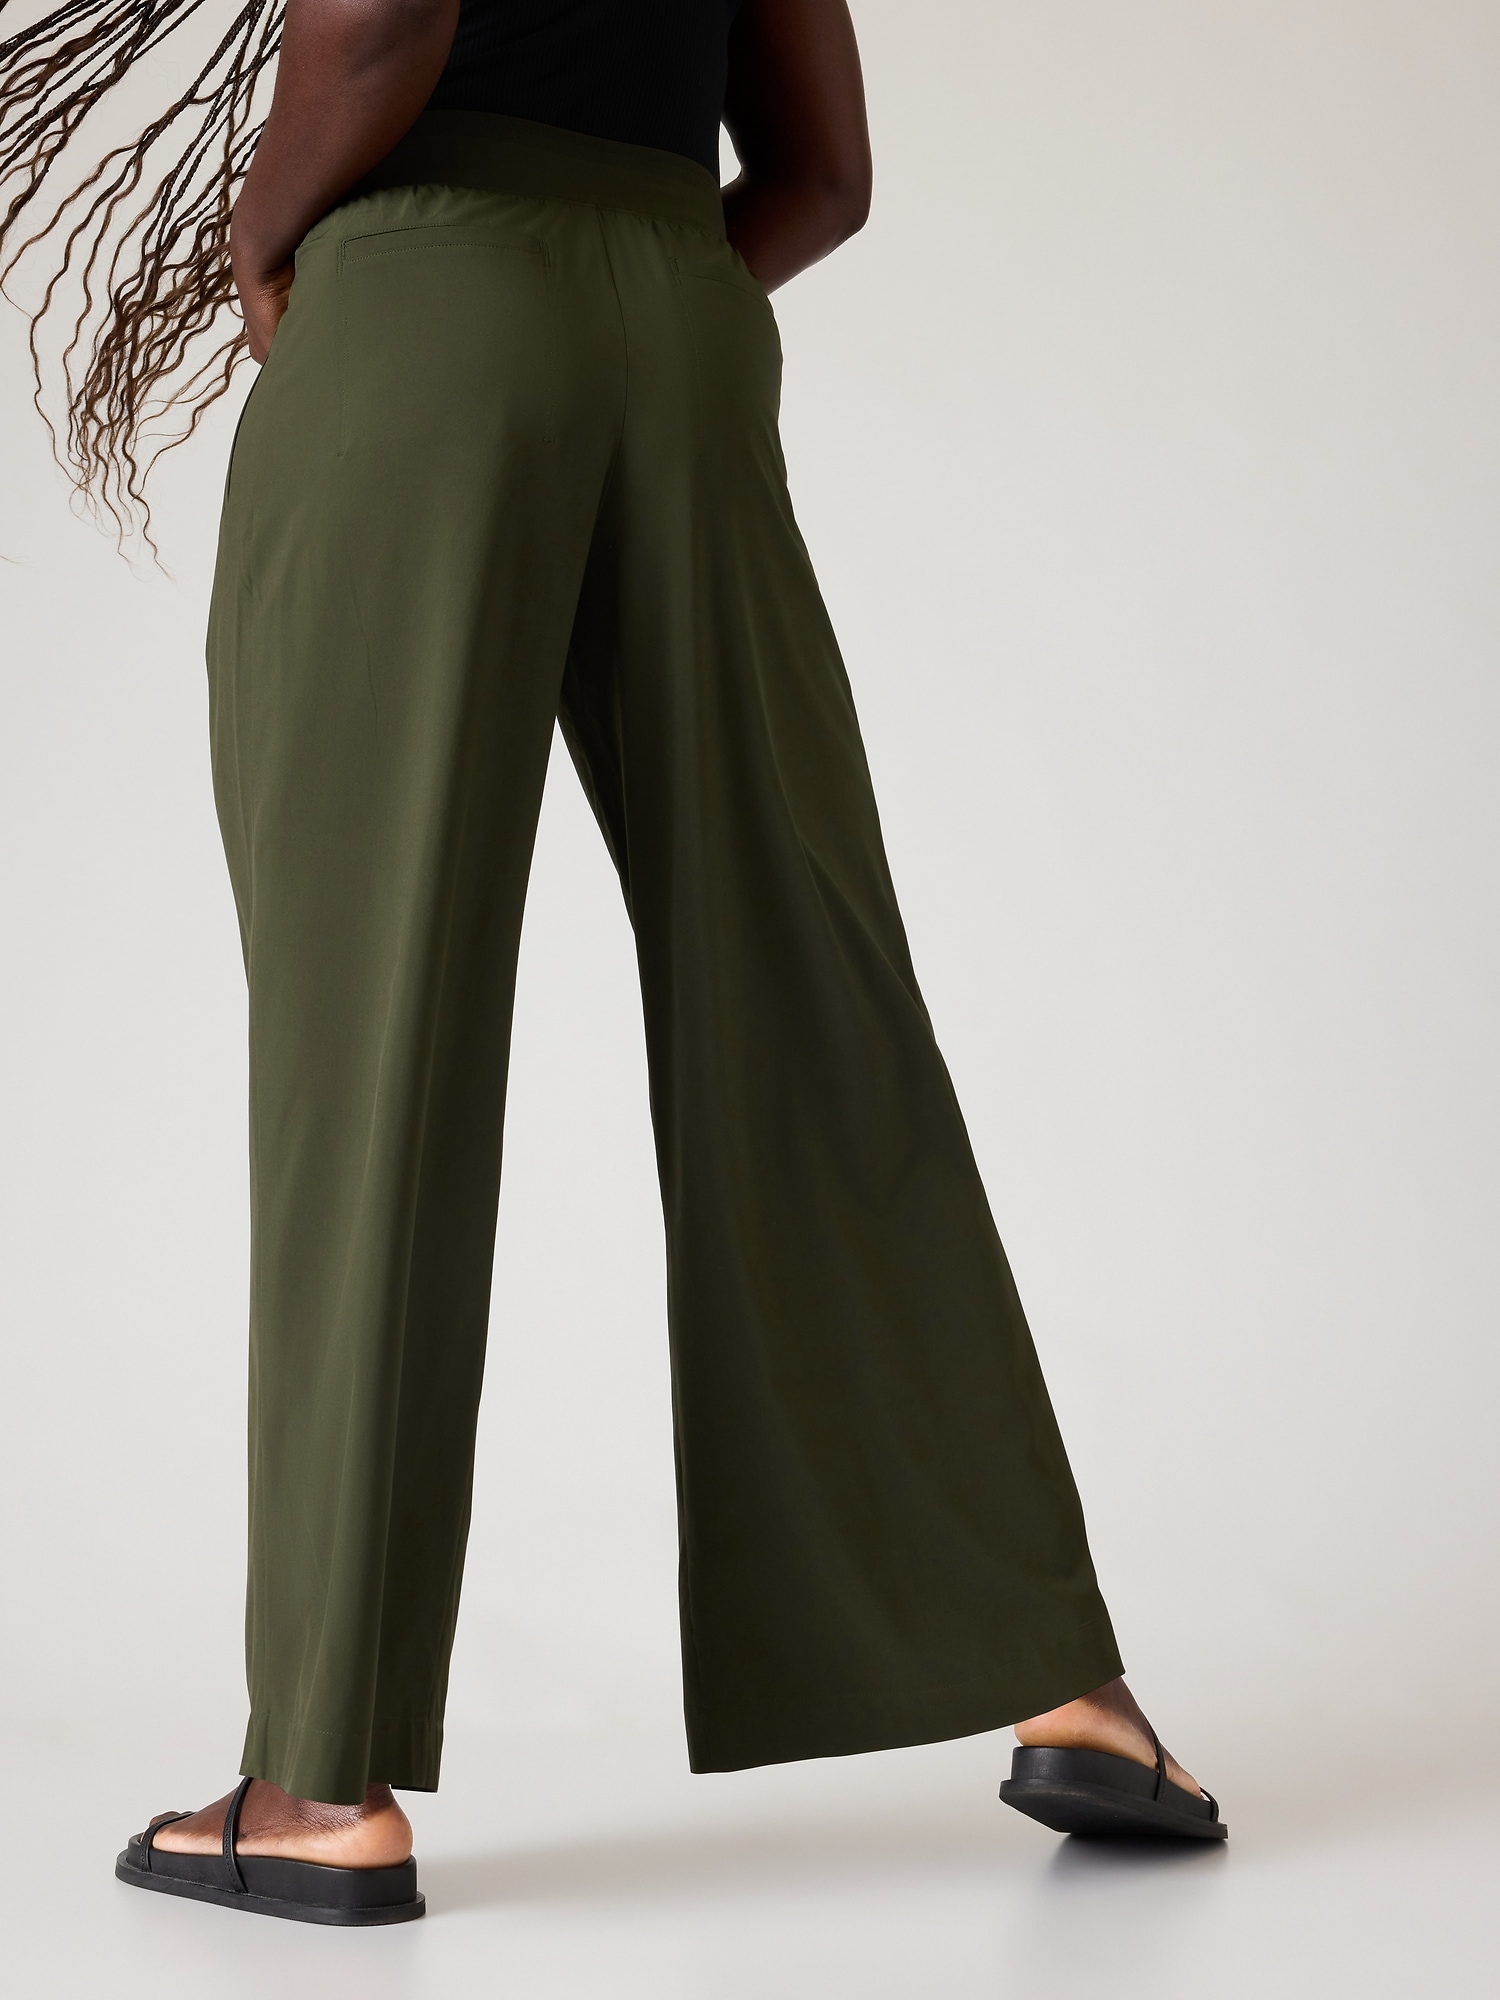 Green Lululemon Wide Leg Pants for Women